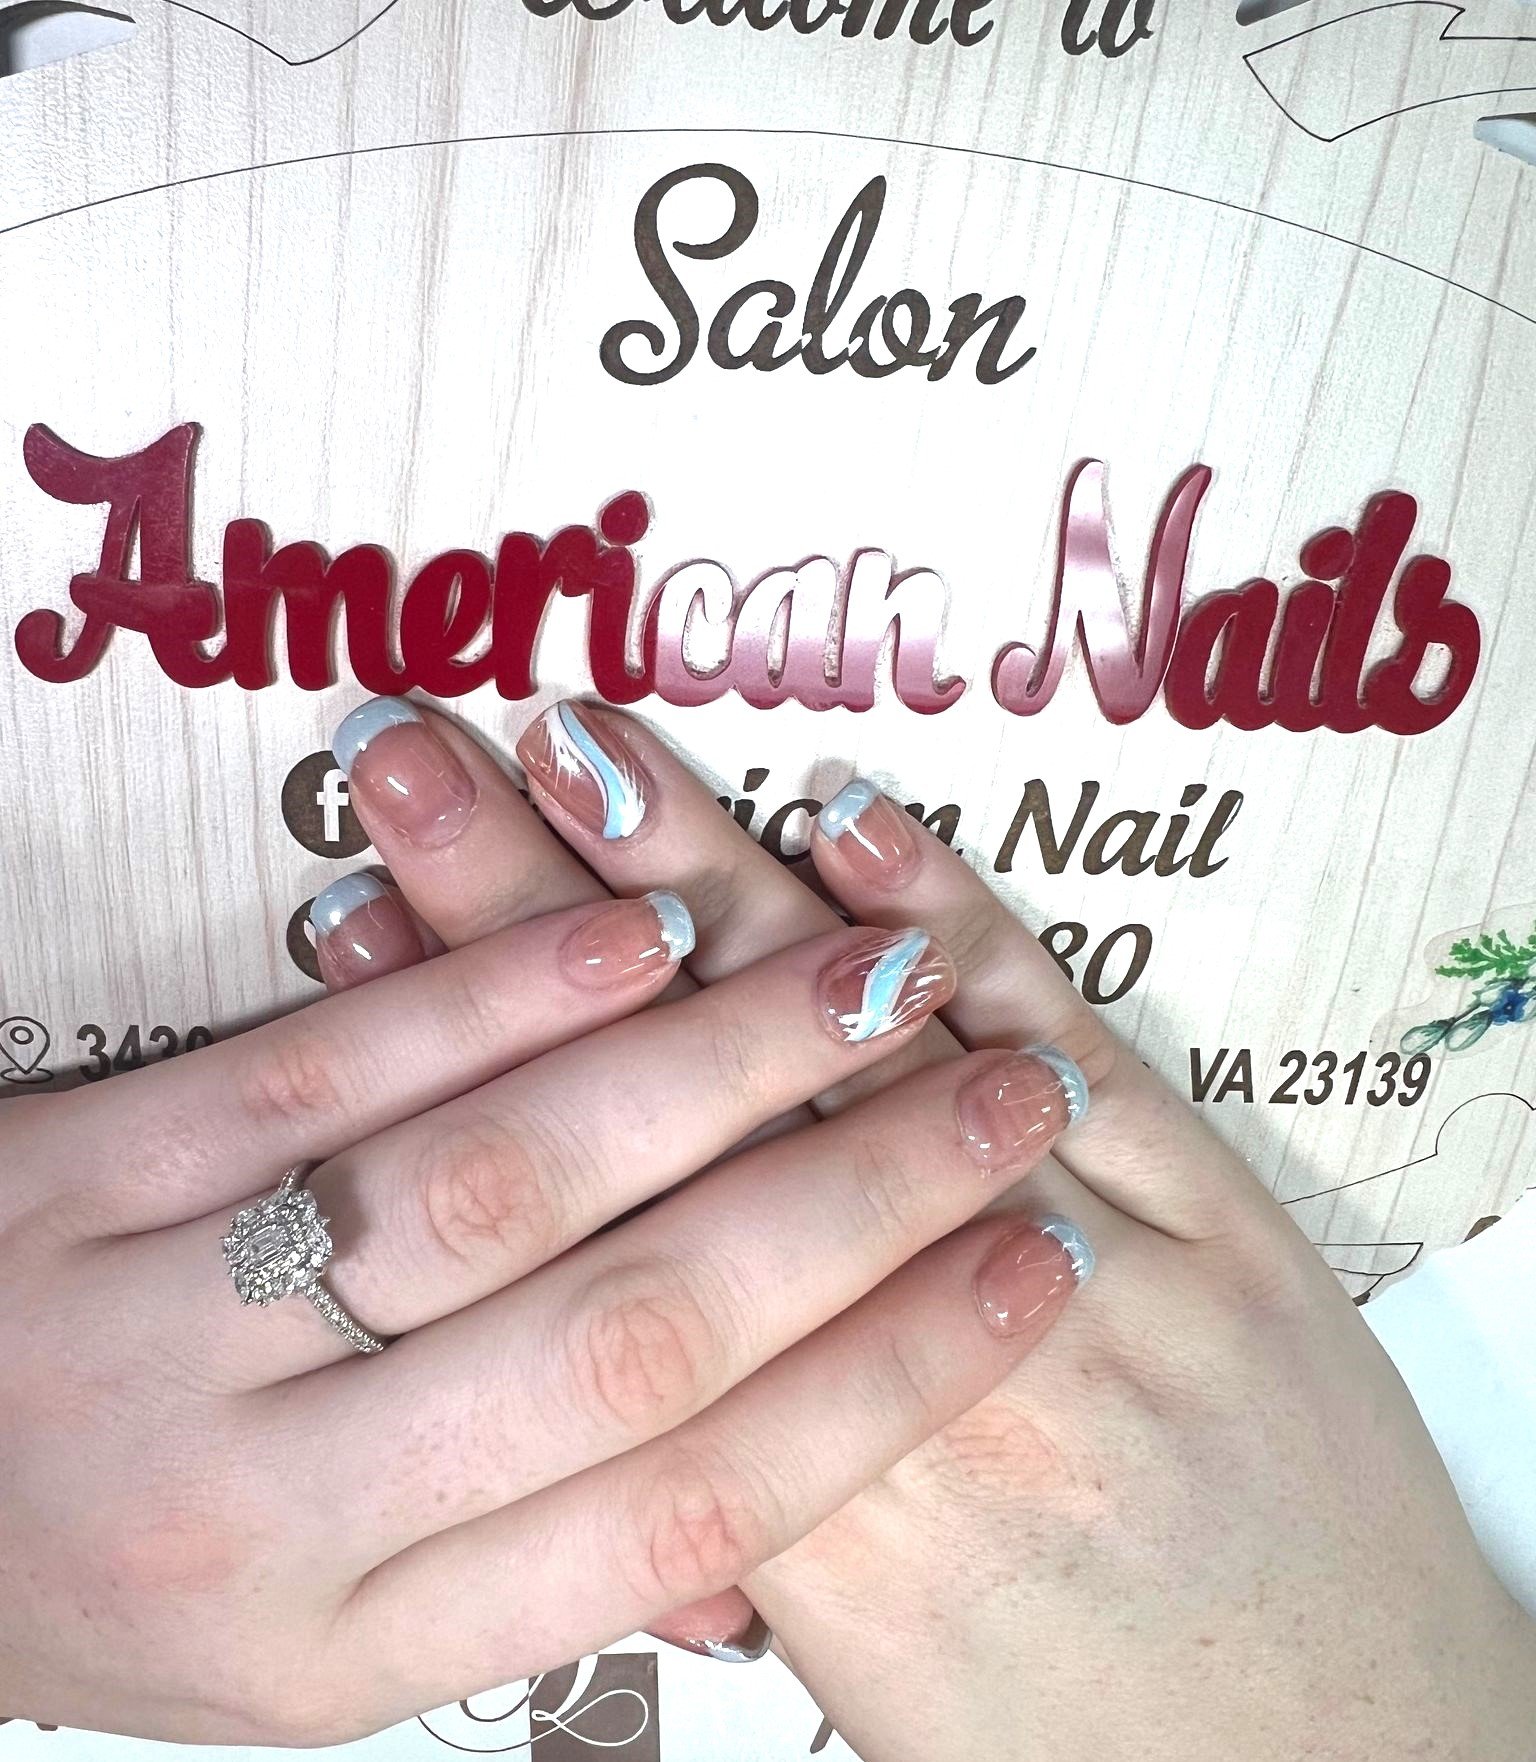 American Nails 3430 Anderson Hwy, Powhatan Virginia 23139